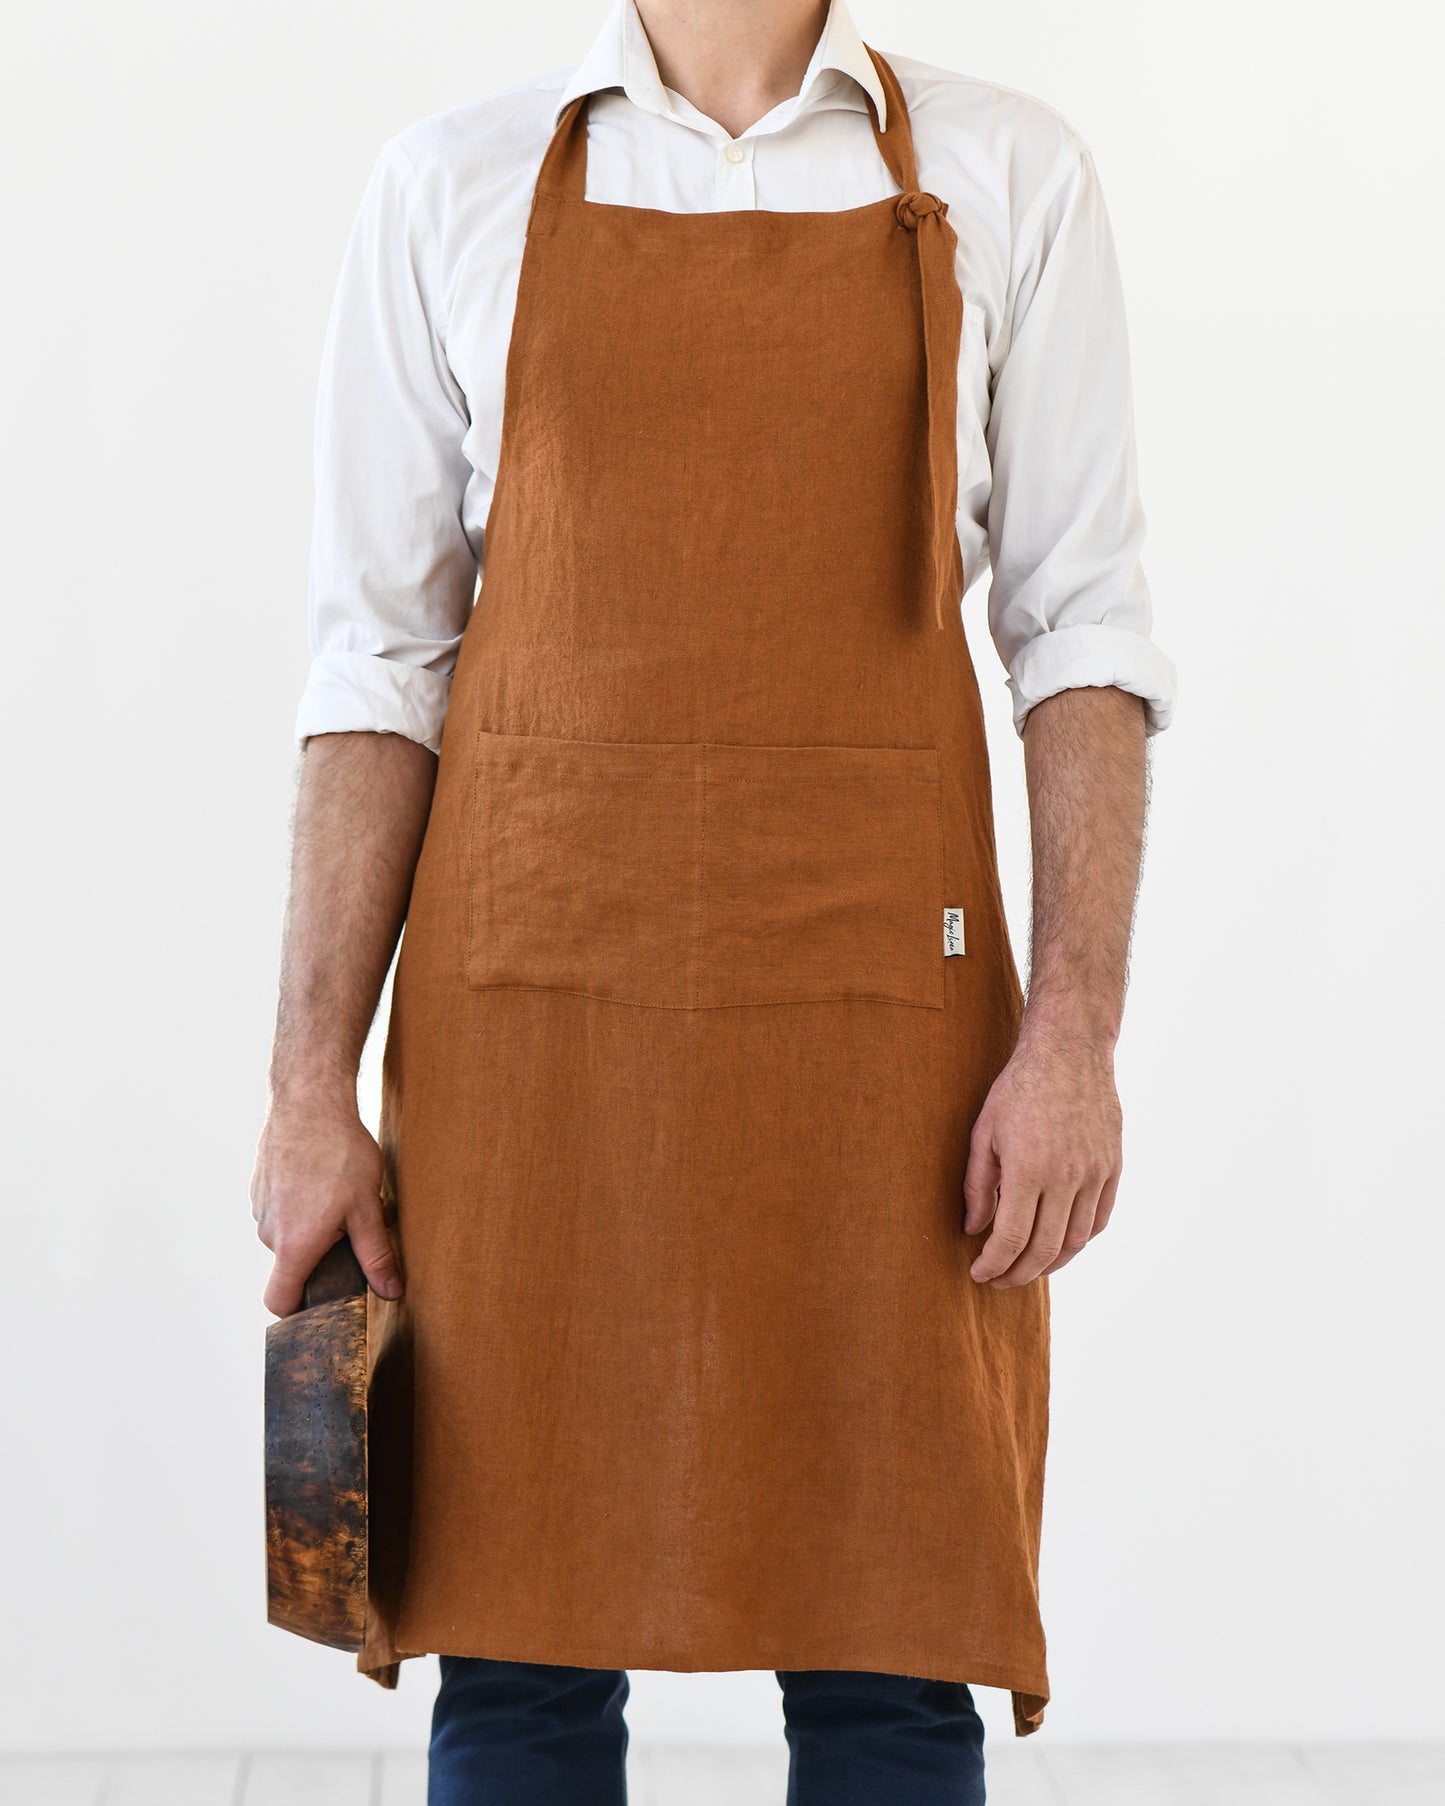 Men's linen bib apron in Cinnamon - MagicLinen